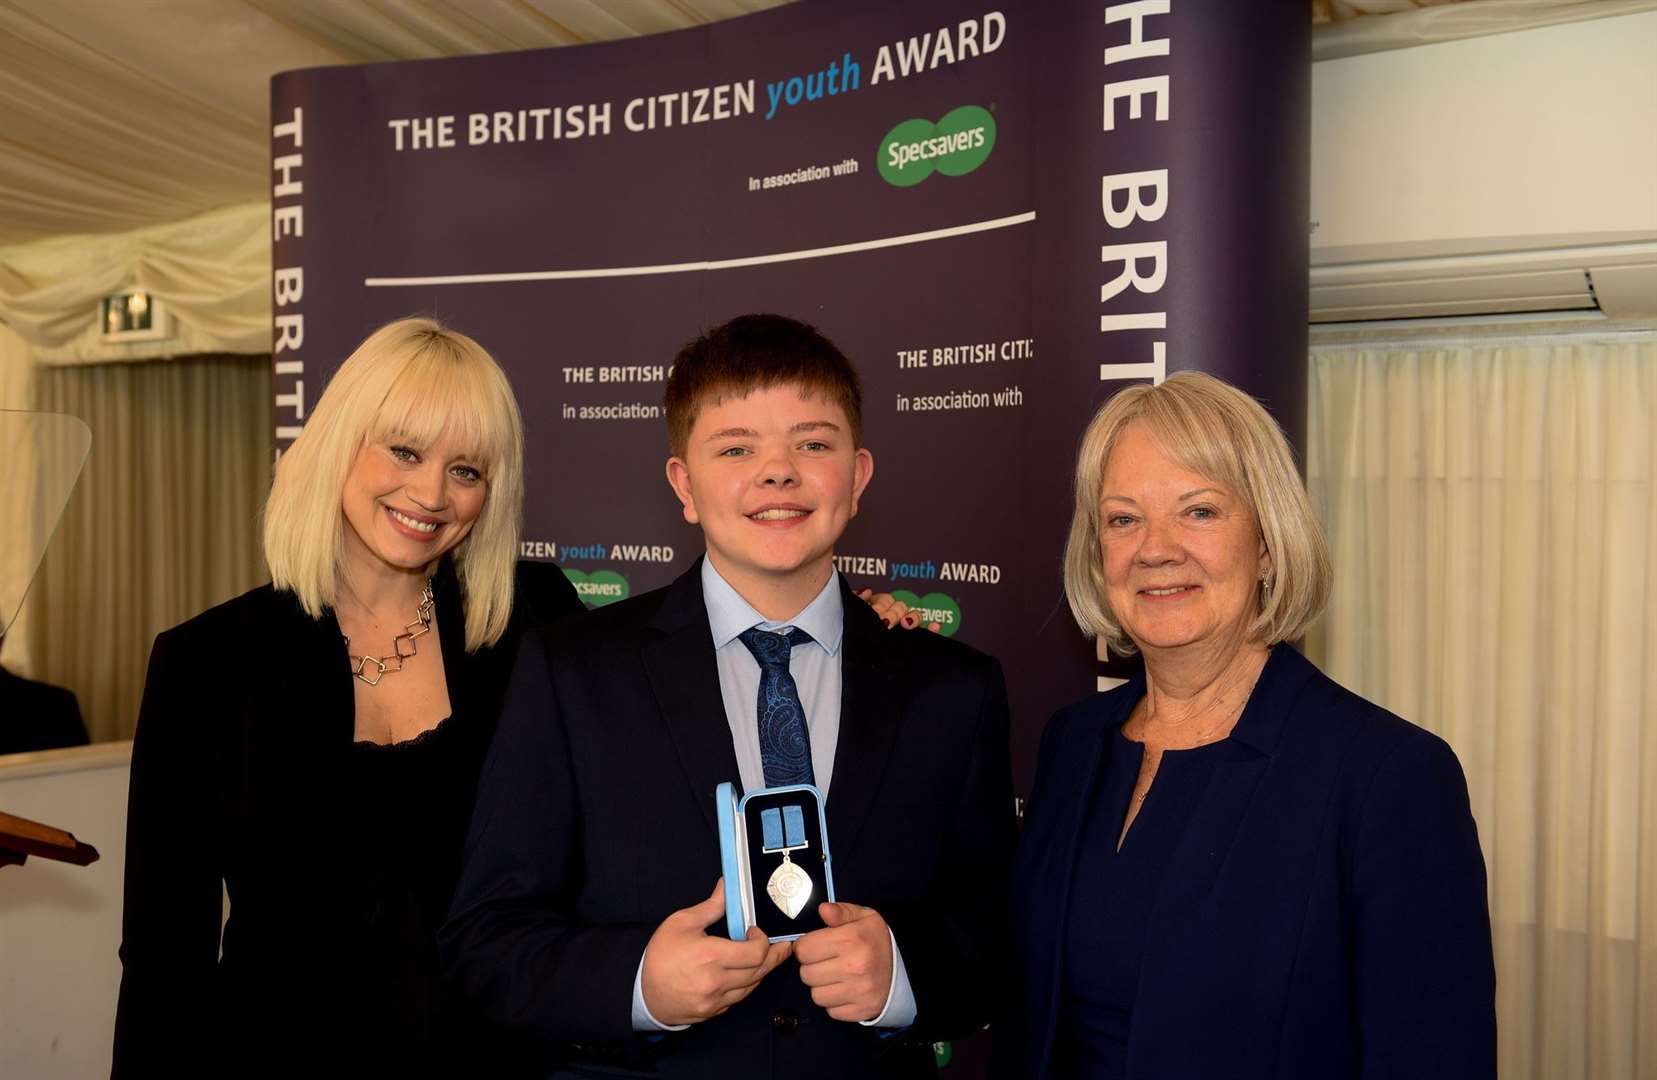 (From left) Kimberly Wyatt, Aidan Henderson BCyA and Dame Mary Perkins at the British Citizen Youth Awards.